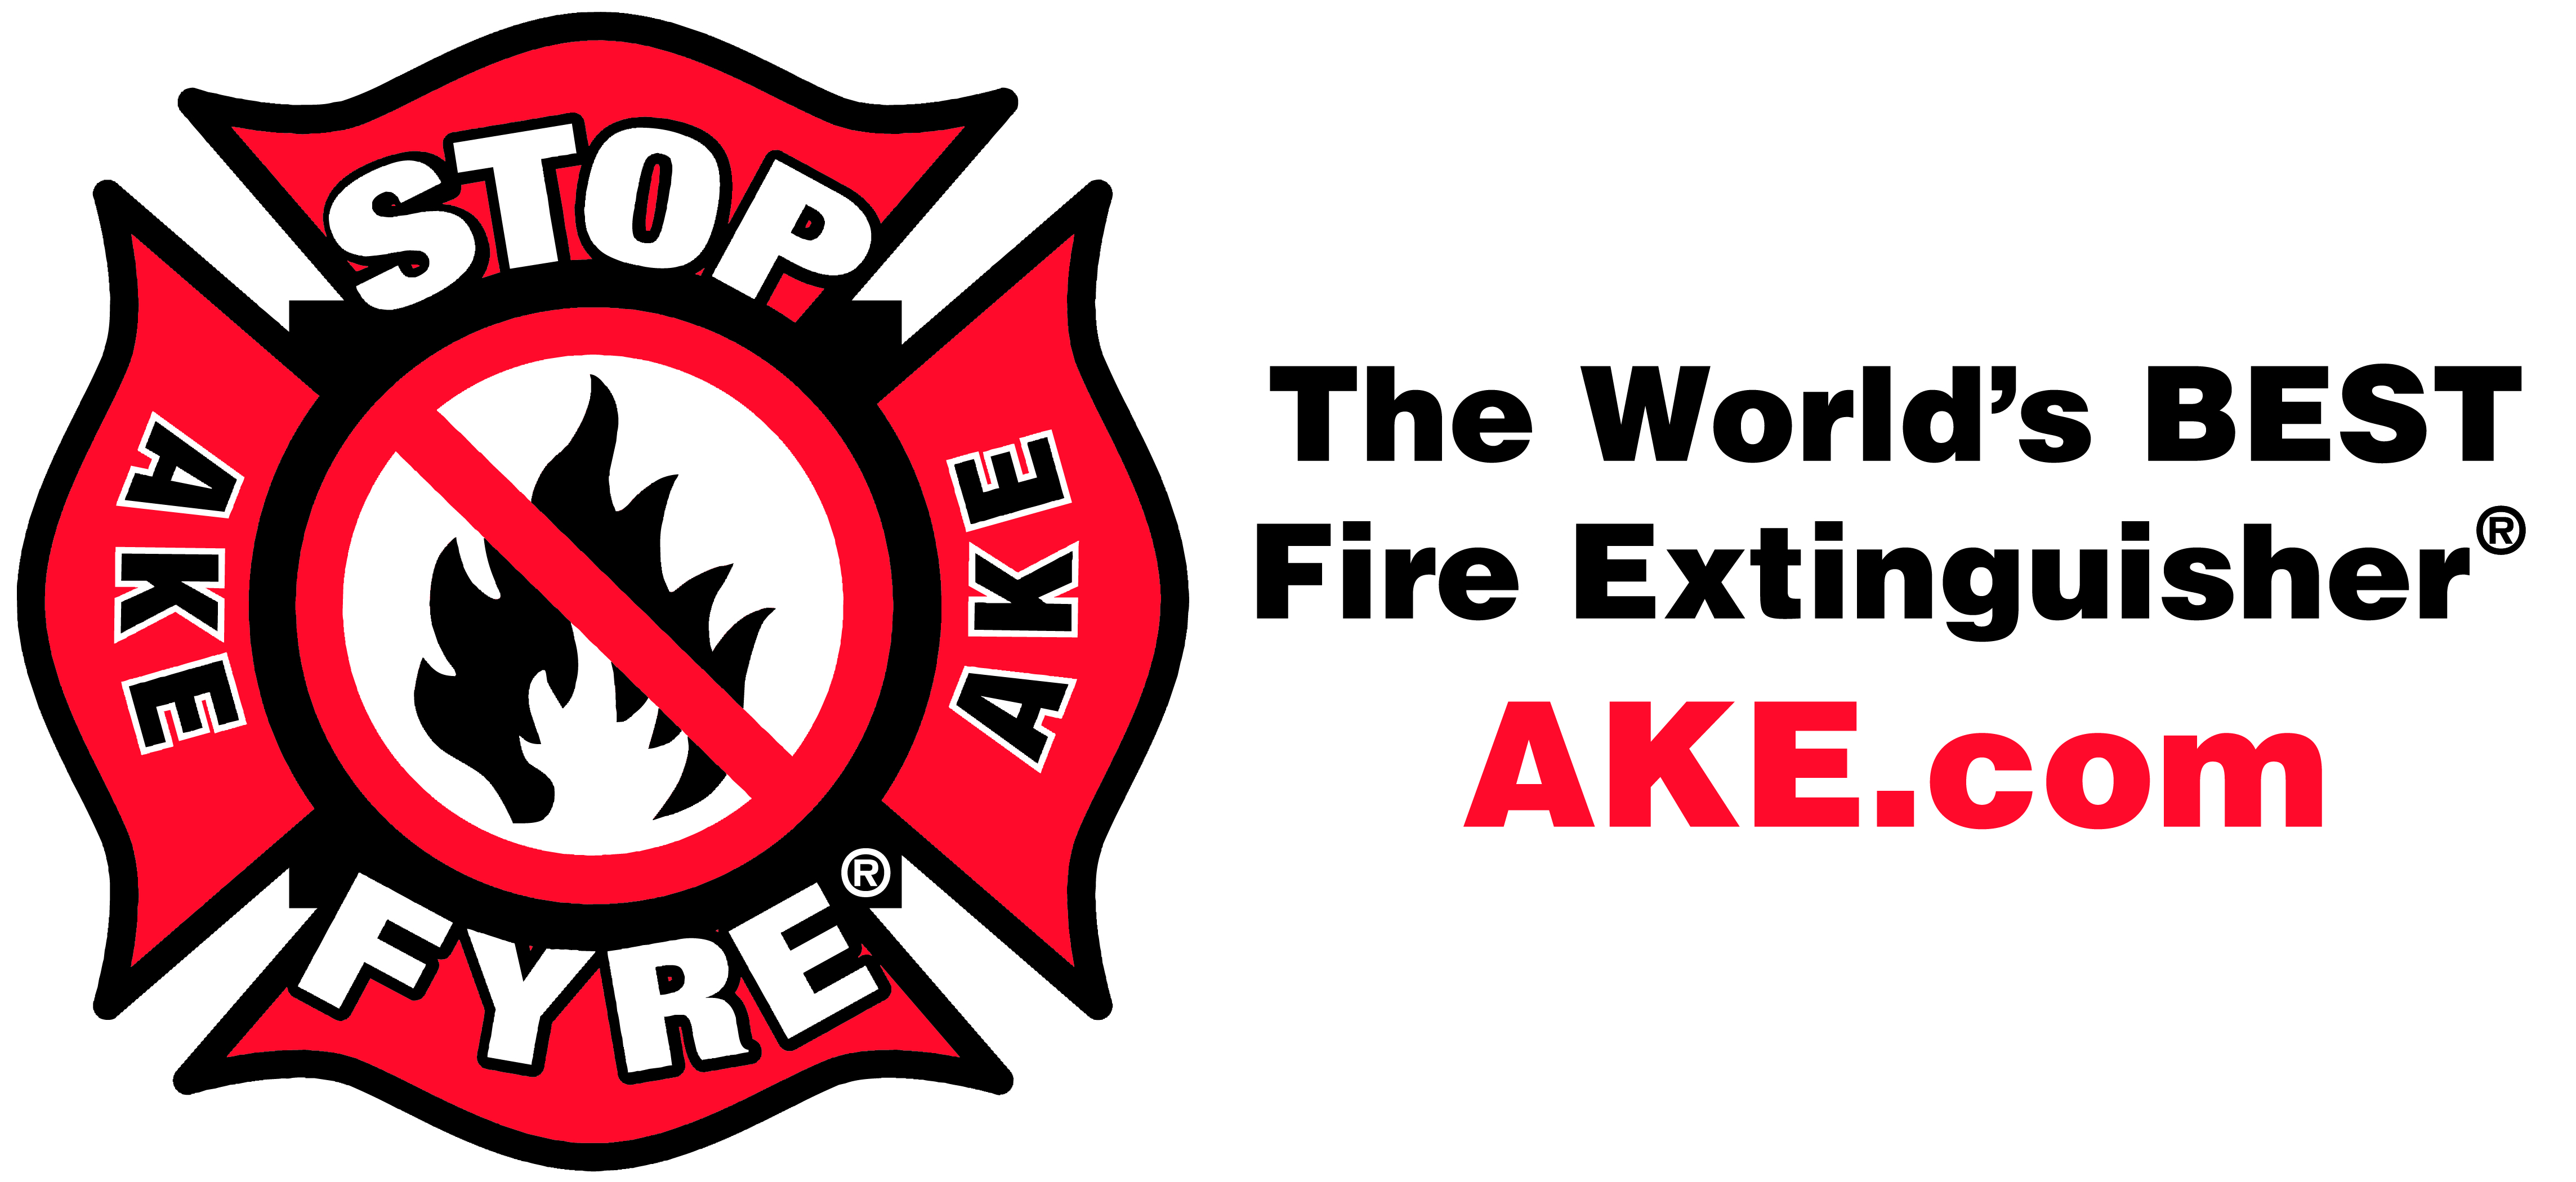 STOP-FYRE® - AKE Safety Equipment